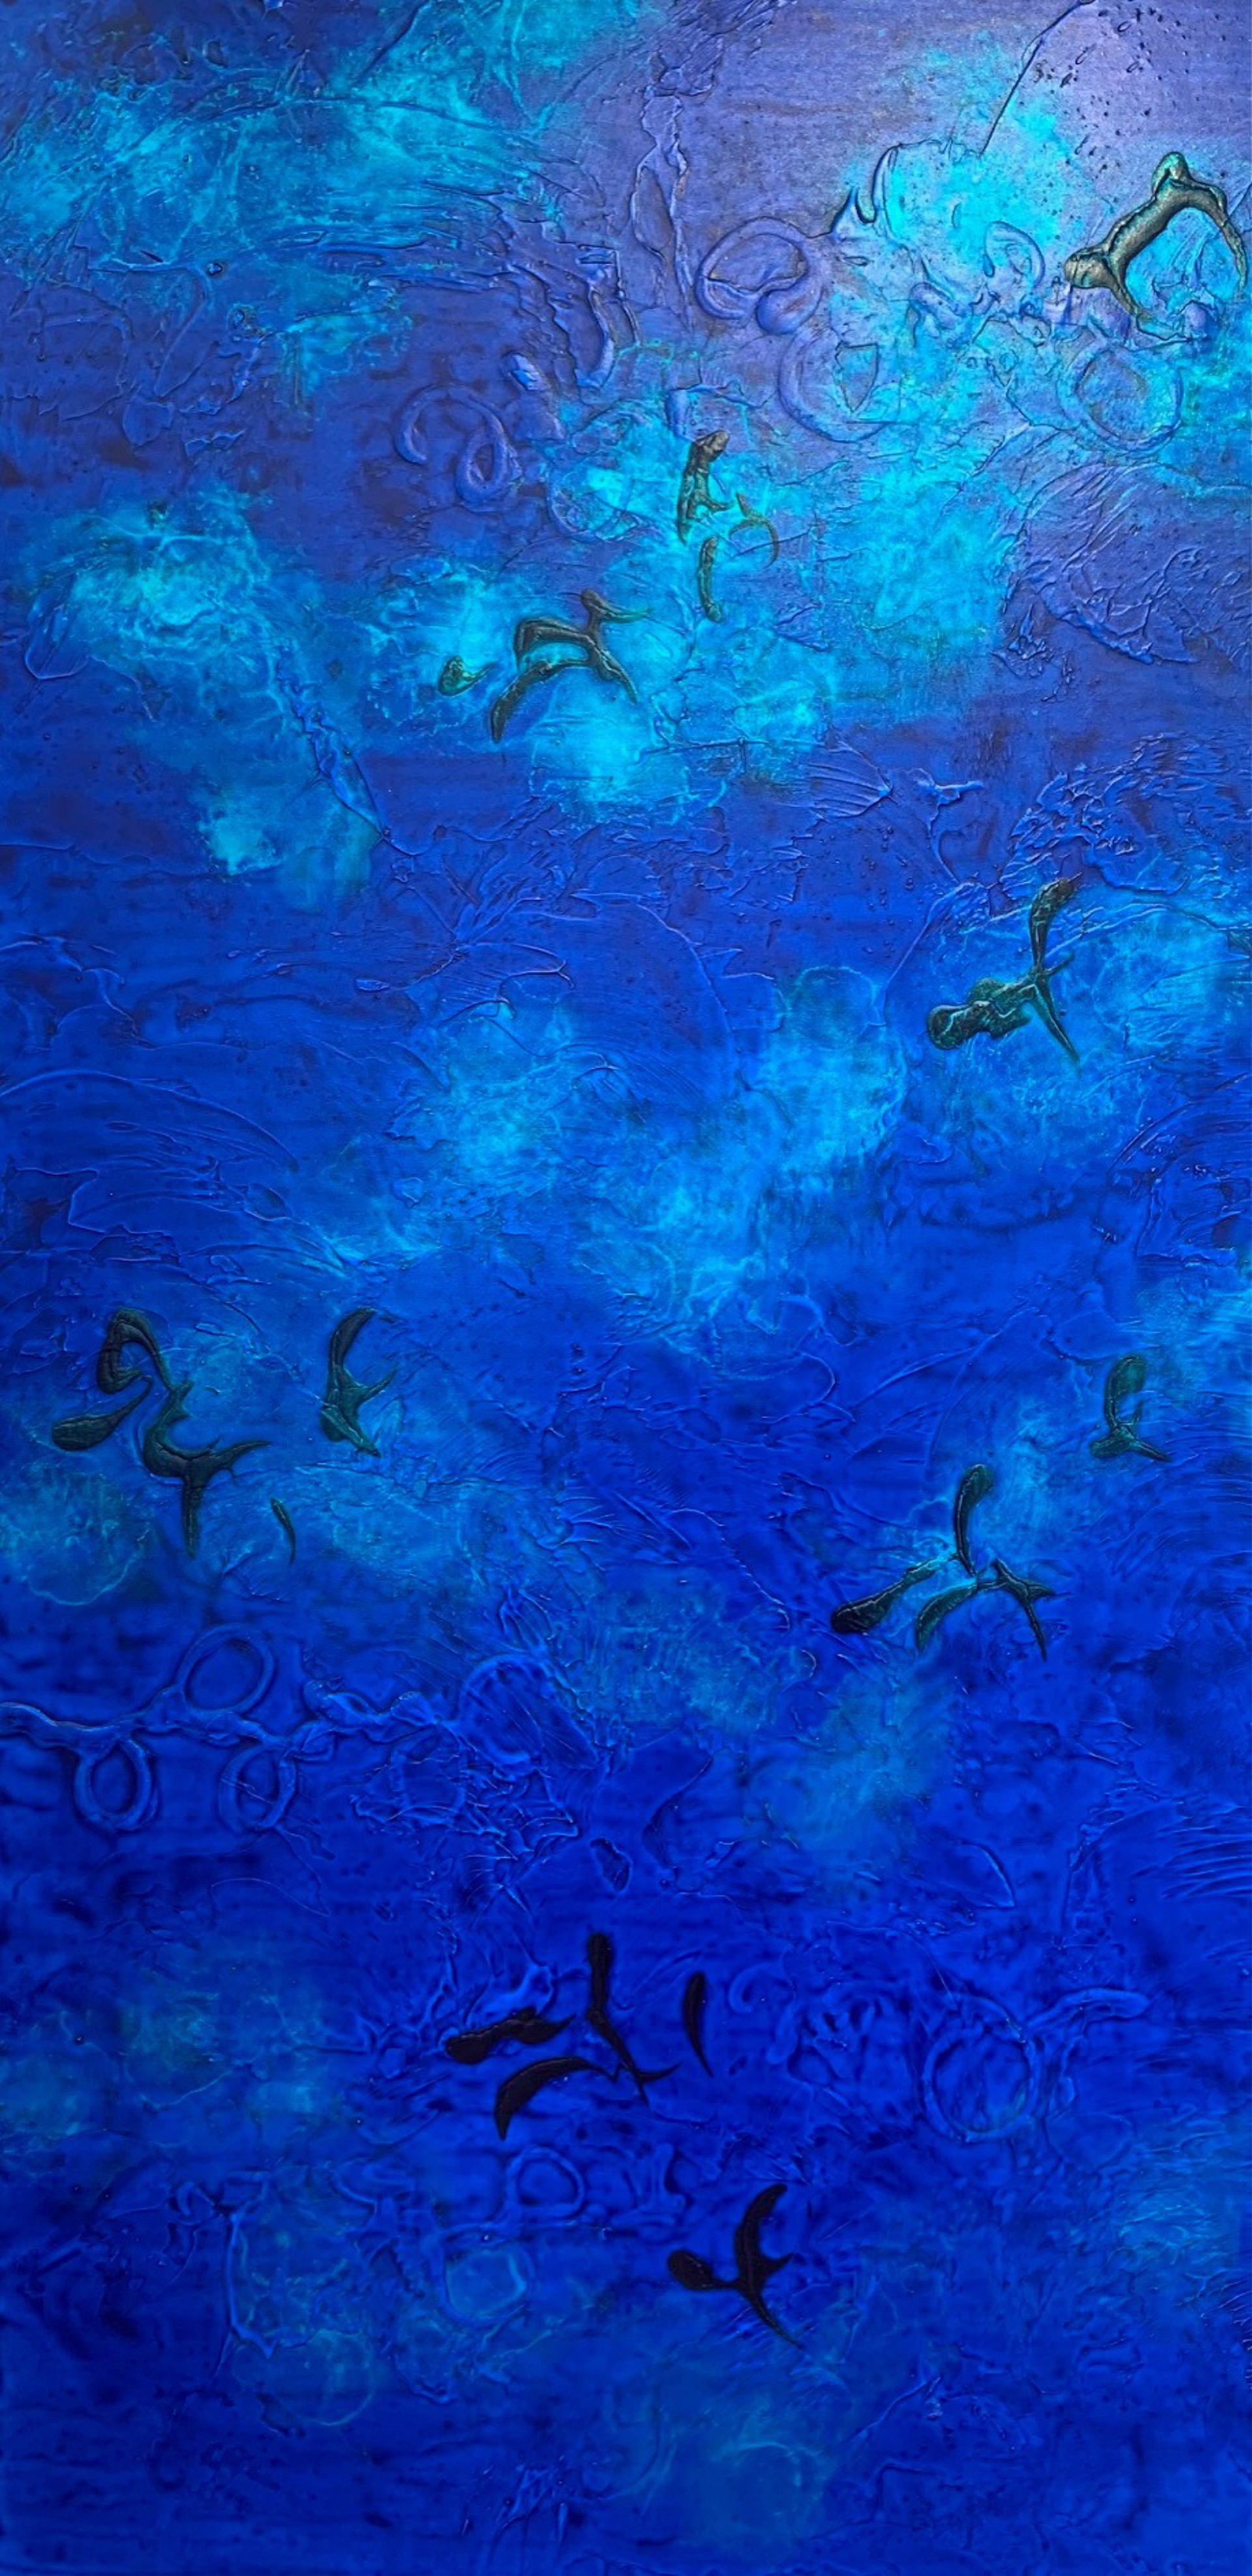 Dreams In Blue 1 (Left) by Julie Quinn